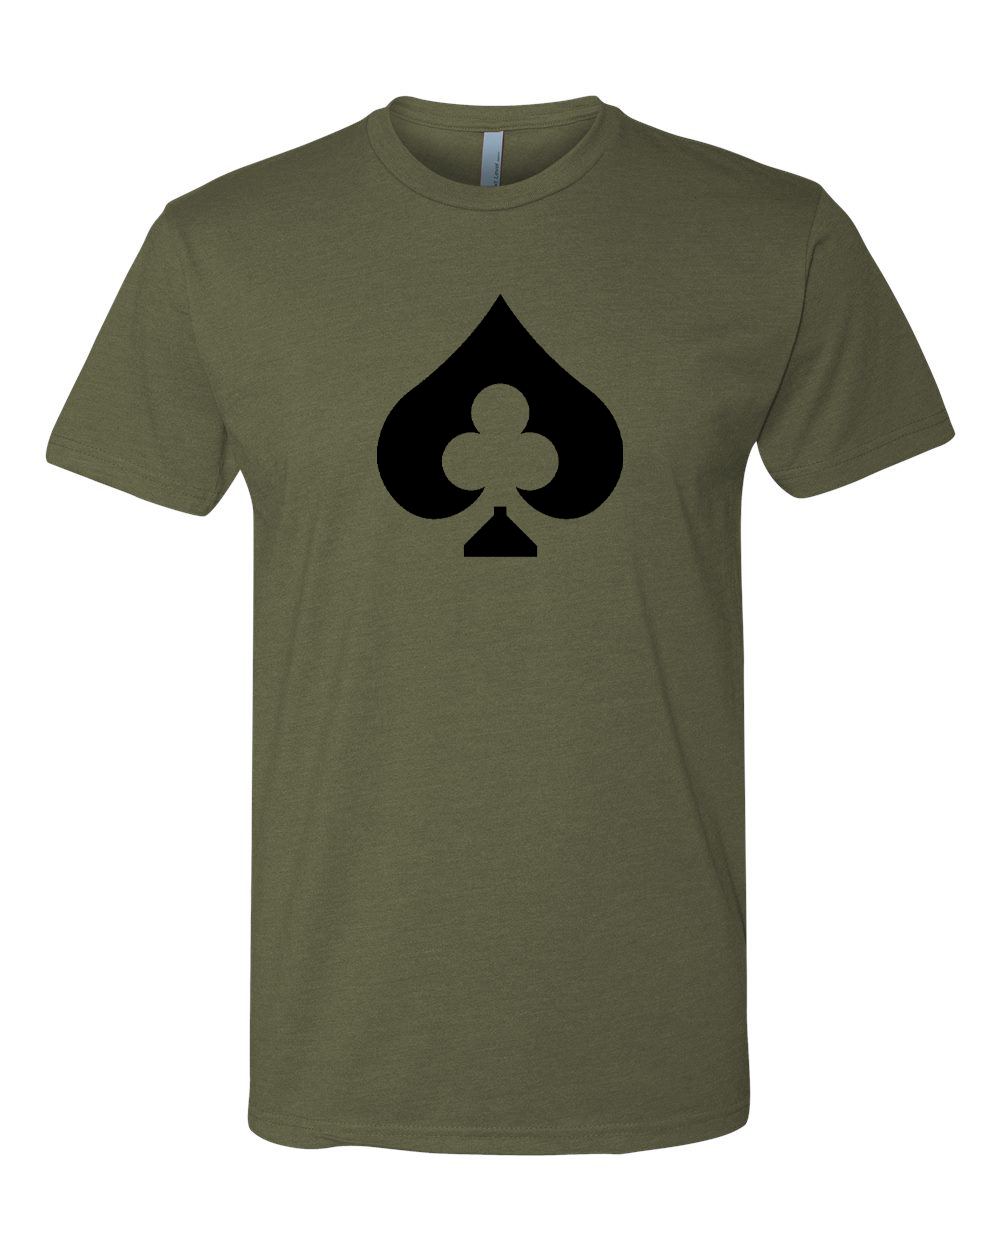 LCC Spade Shirt - Military